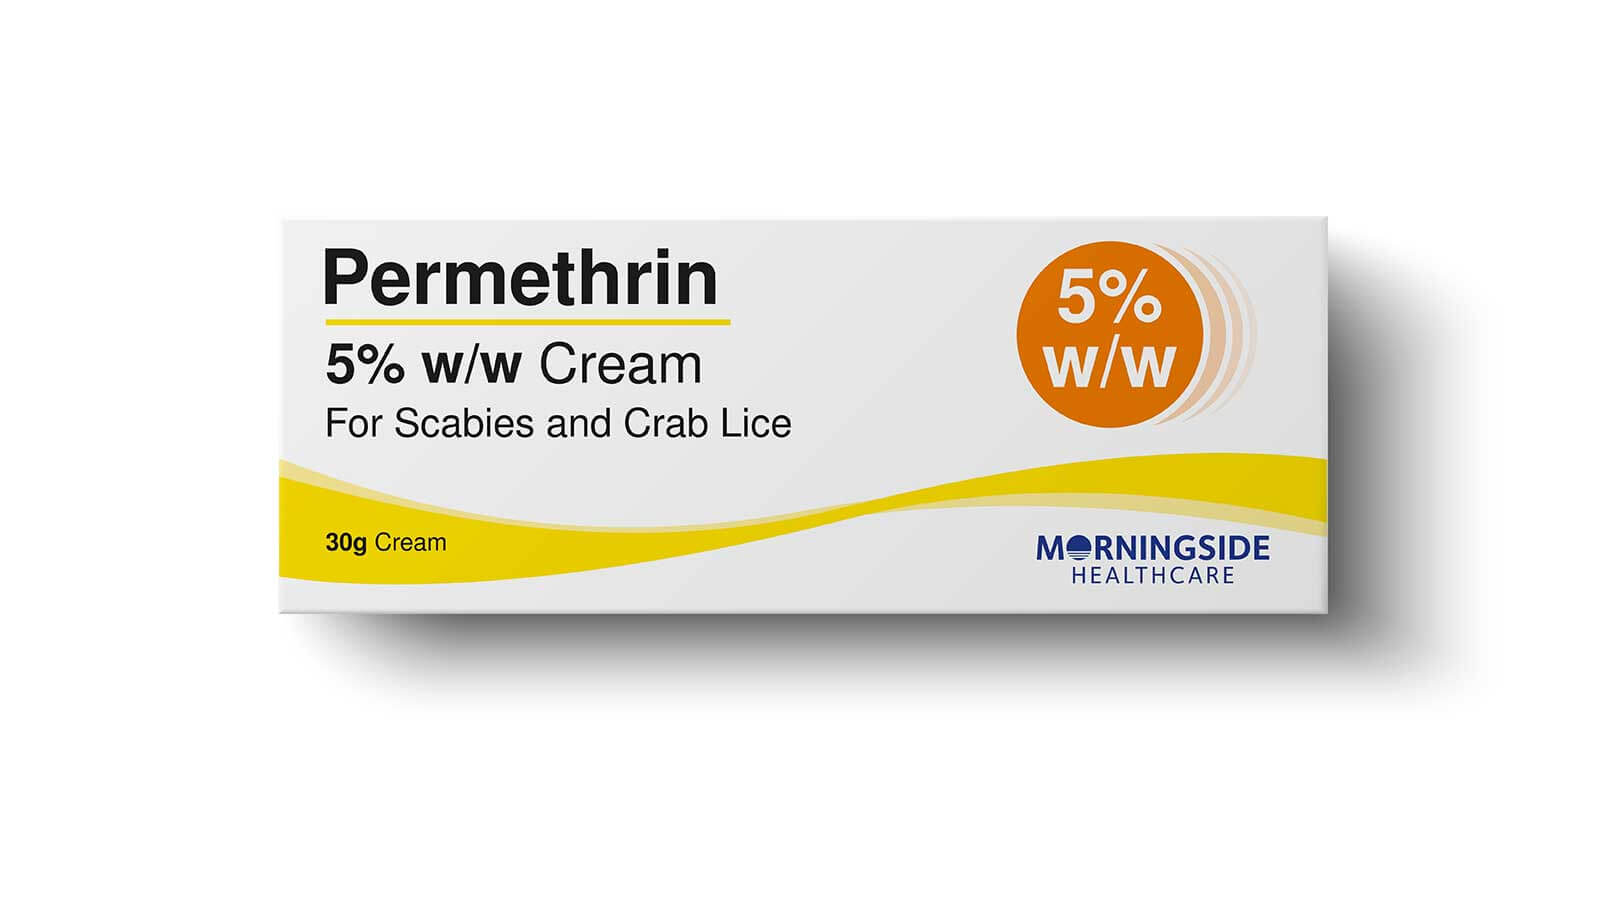 Permethrin cream